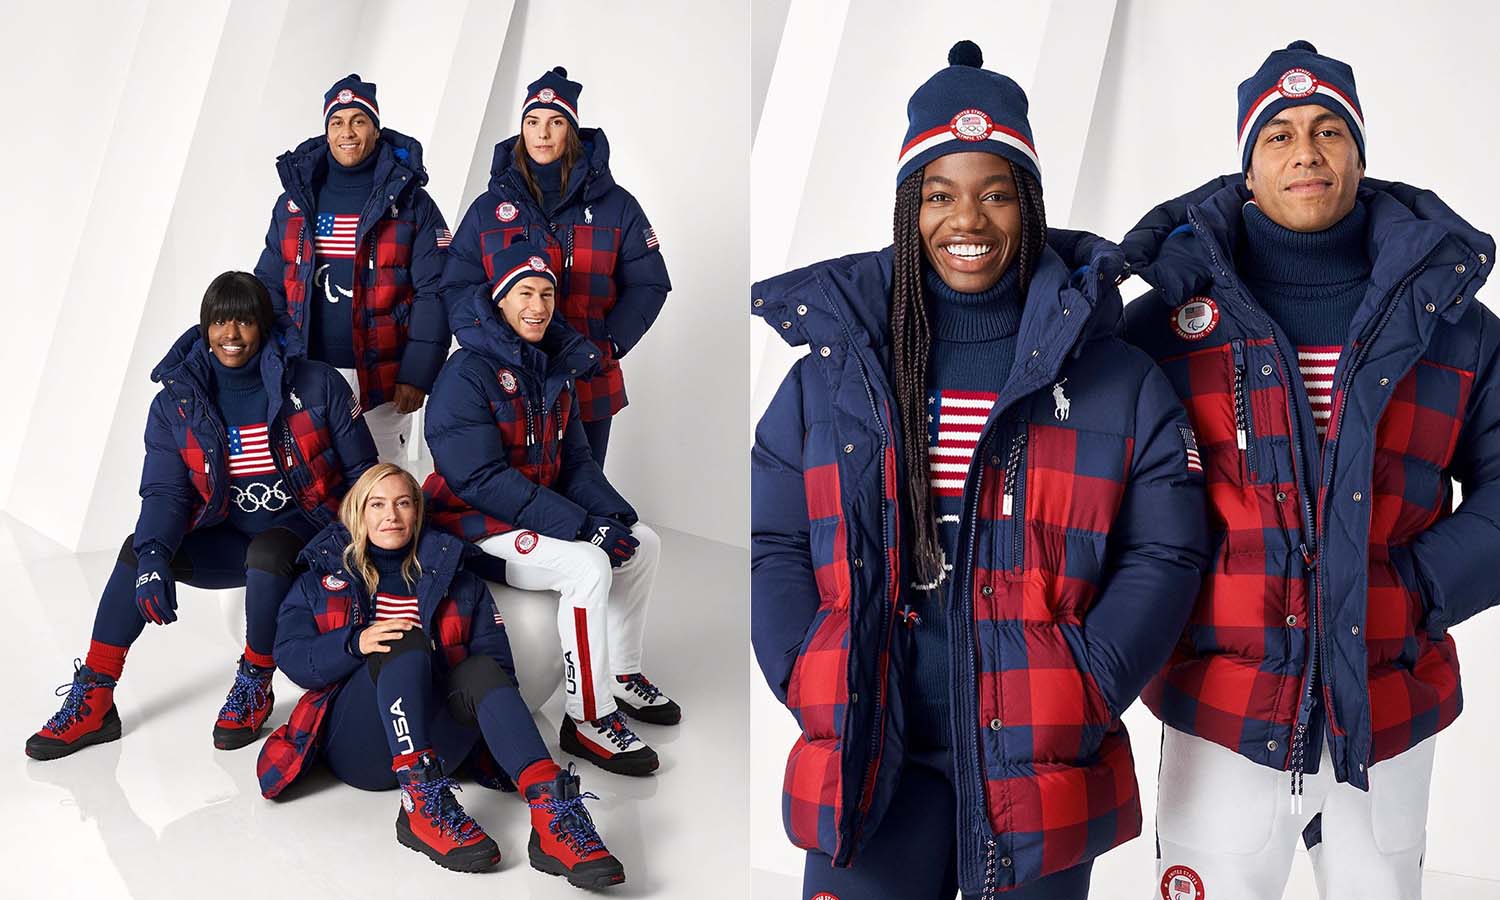 Ralph Lauren 为 2022 年冬季奥运会的美国队打造制服